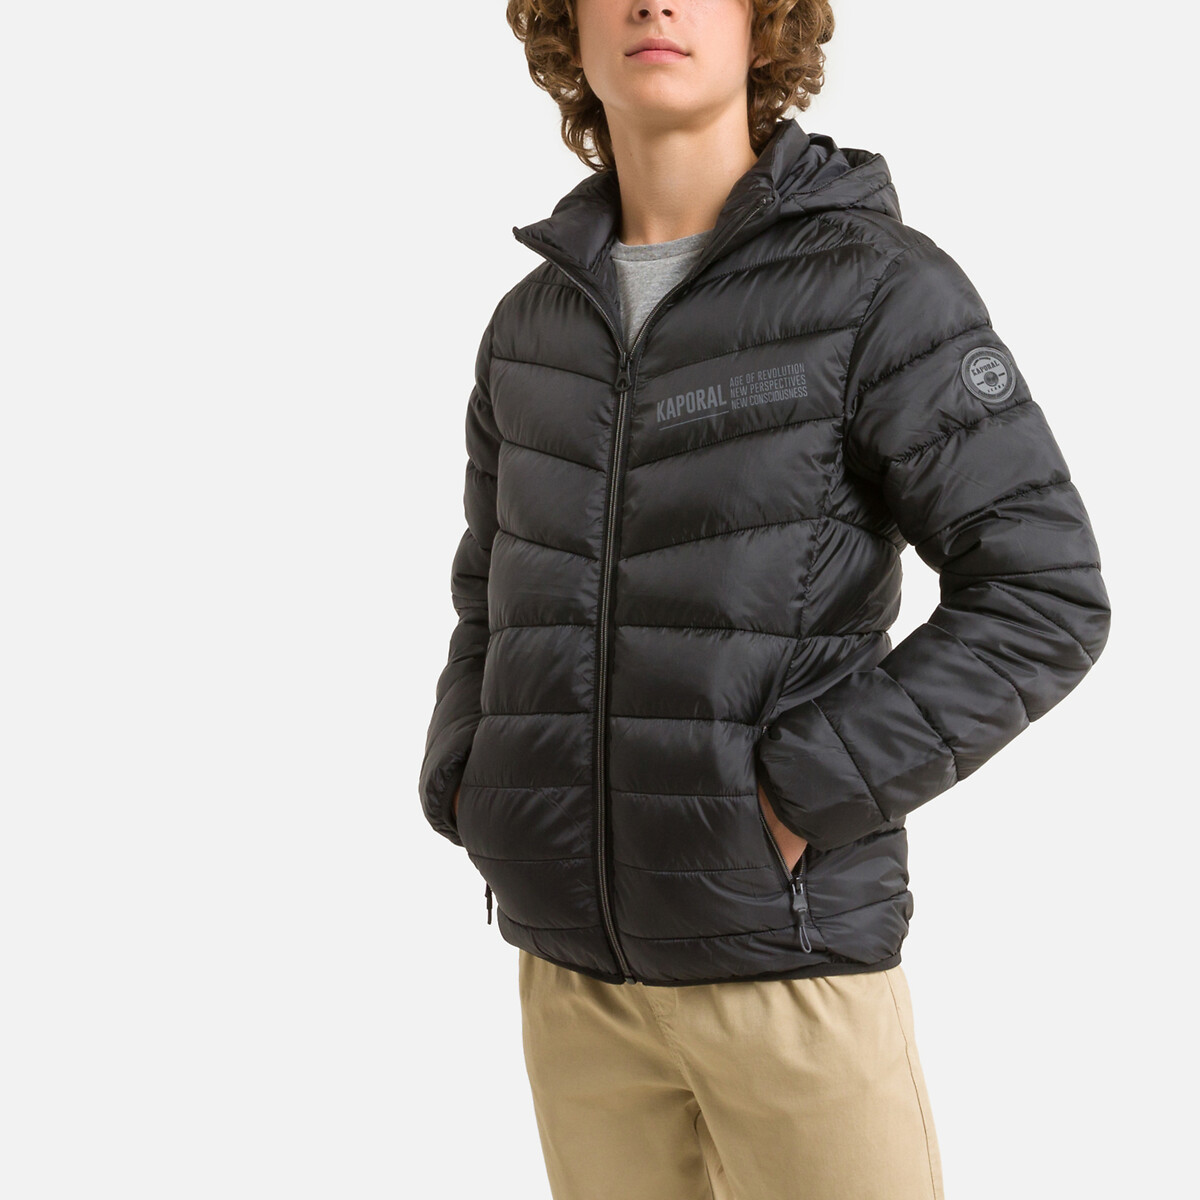 Warm Hooded Padded Jacket, 10-16 Years